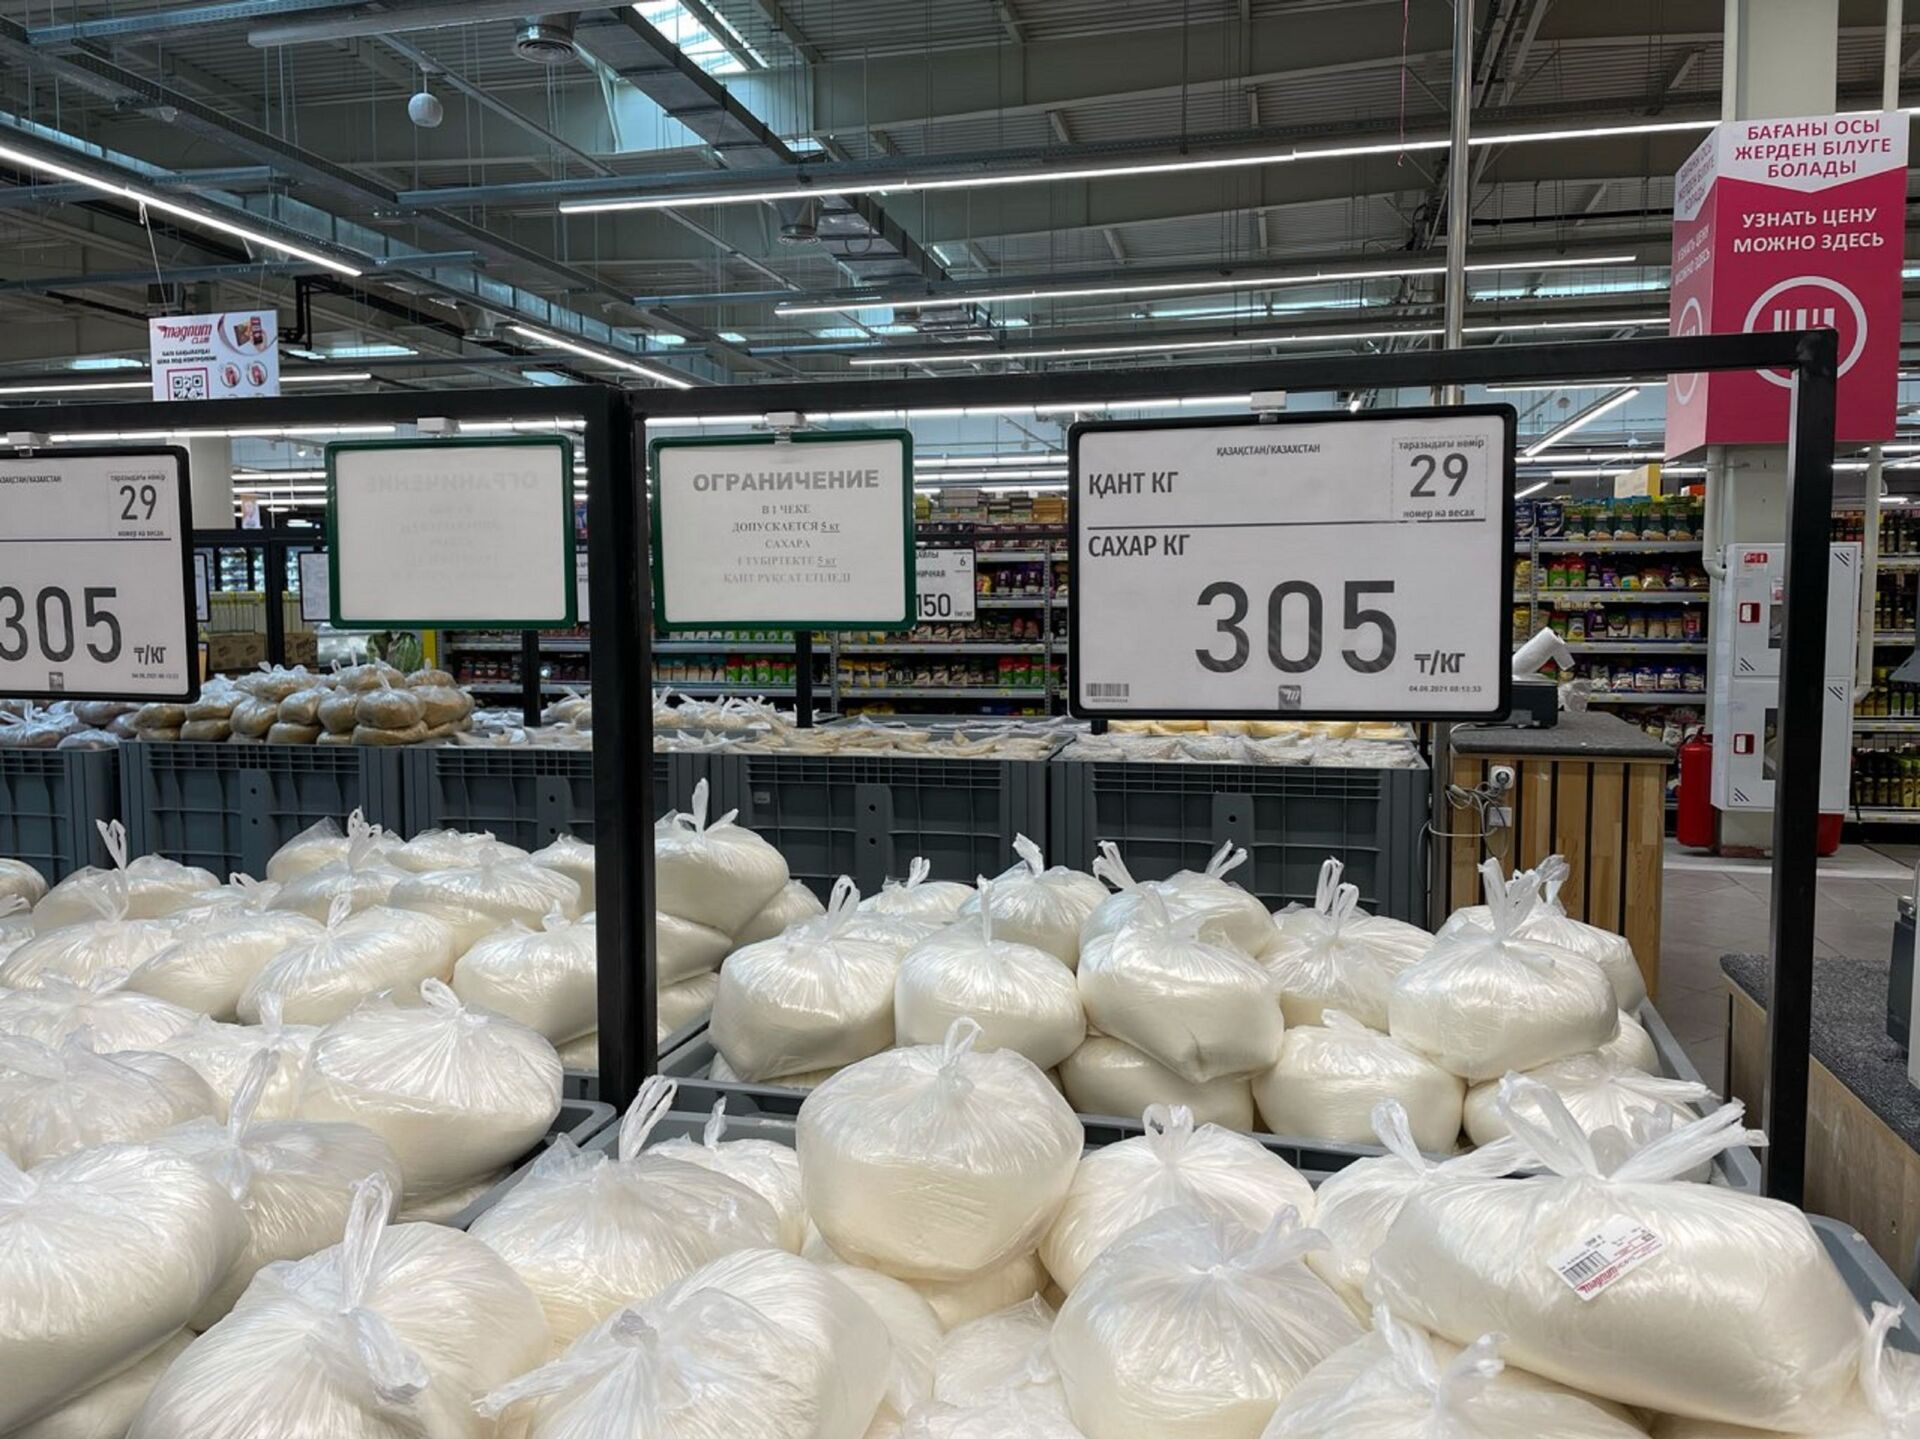 Продажу сахара до пяти кг в одни руки ограничили в одном из супермаркетов Нур-Султана - Sputnik Казахстан, 1920, 08.06.2021